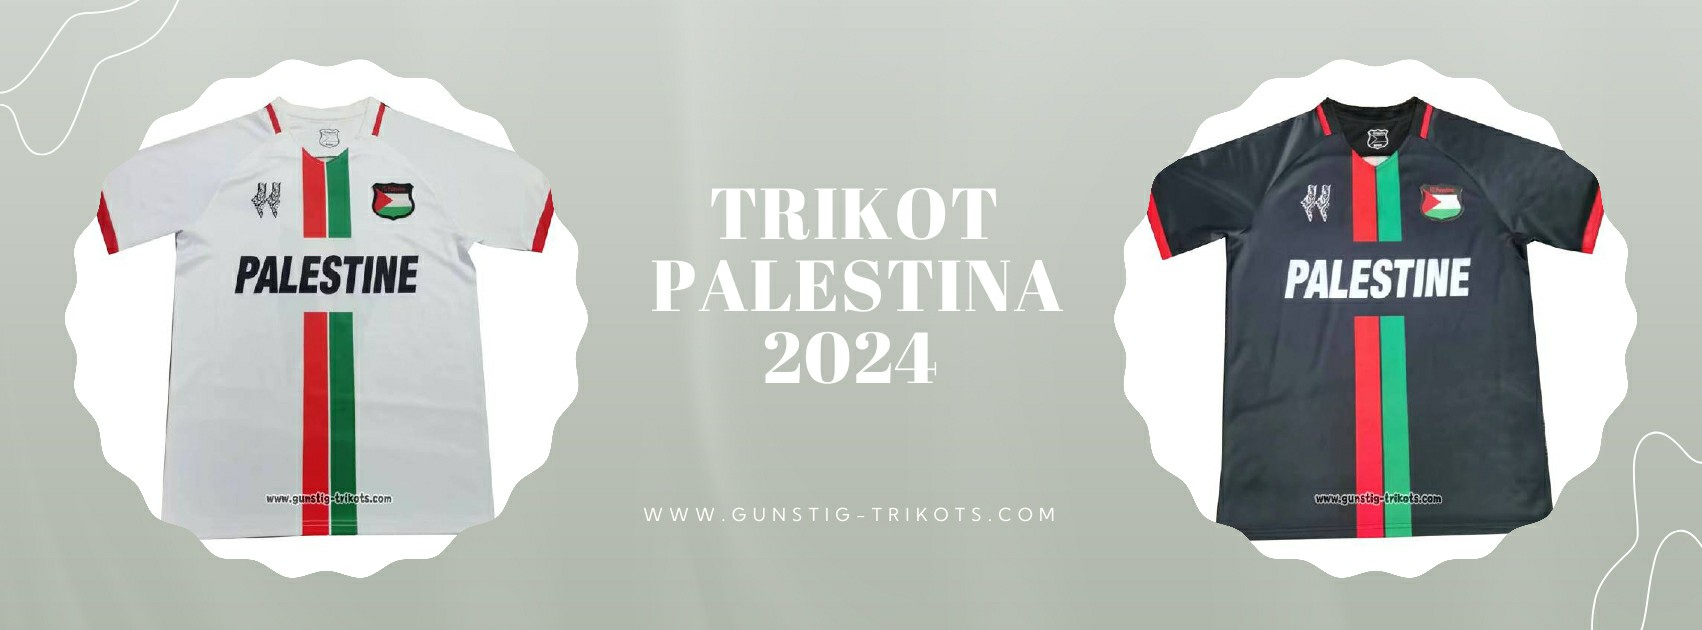 Palestina Trikot 2024-2025